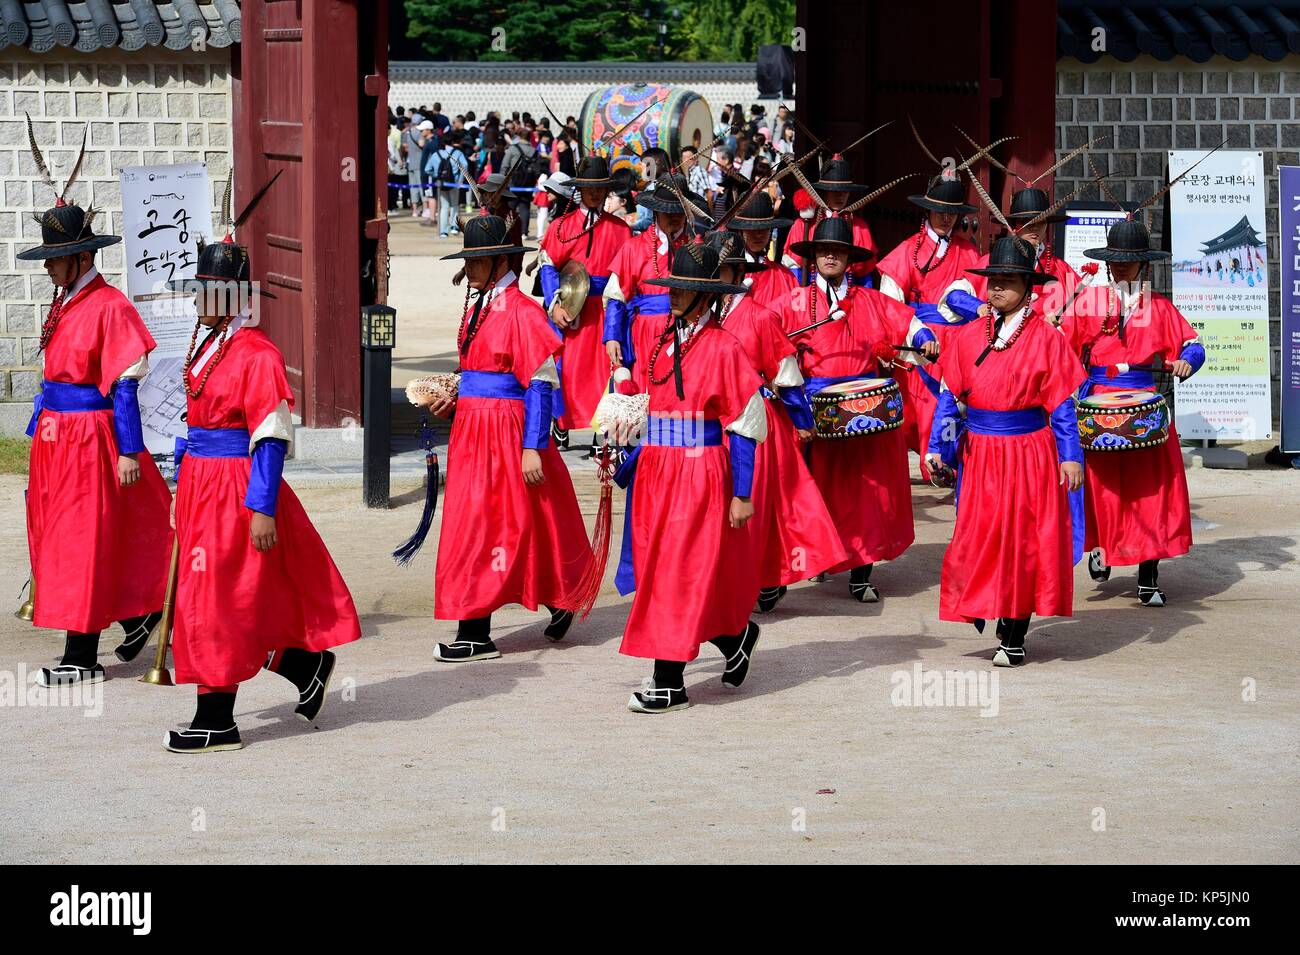 Changing of the royal guards at Gyeongbokgung Palace in Seoul,South Korea. Stock Photo